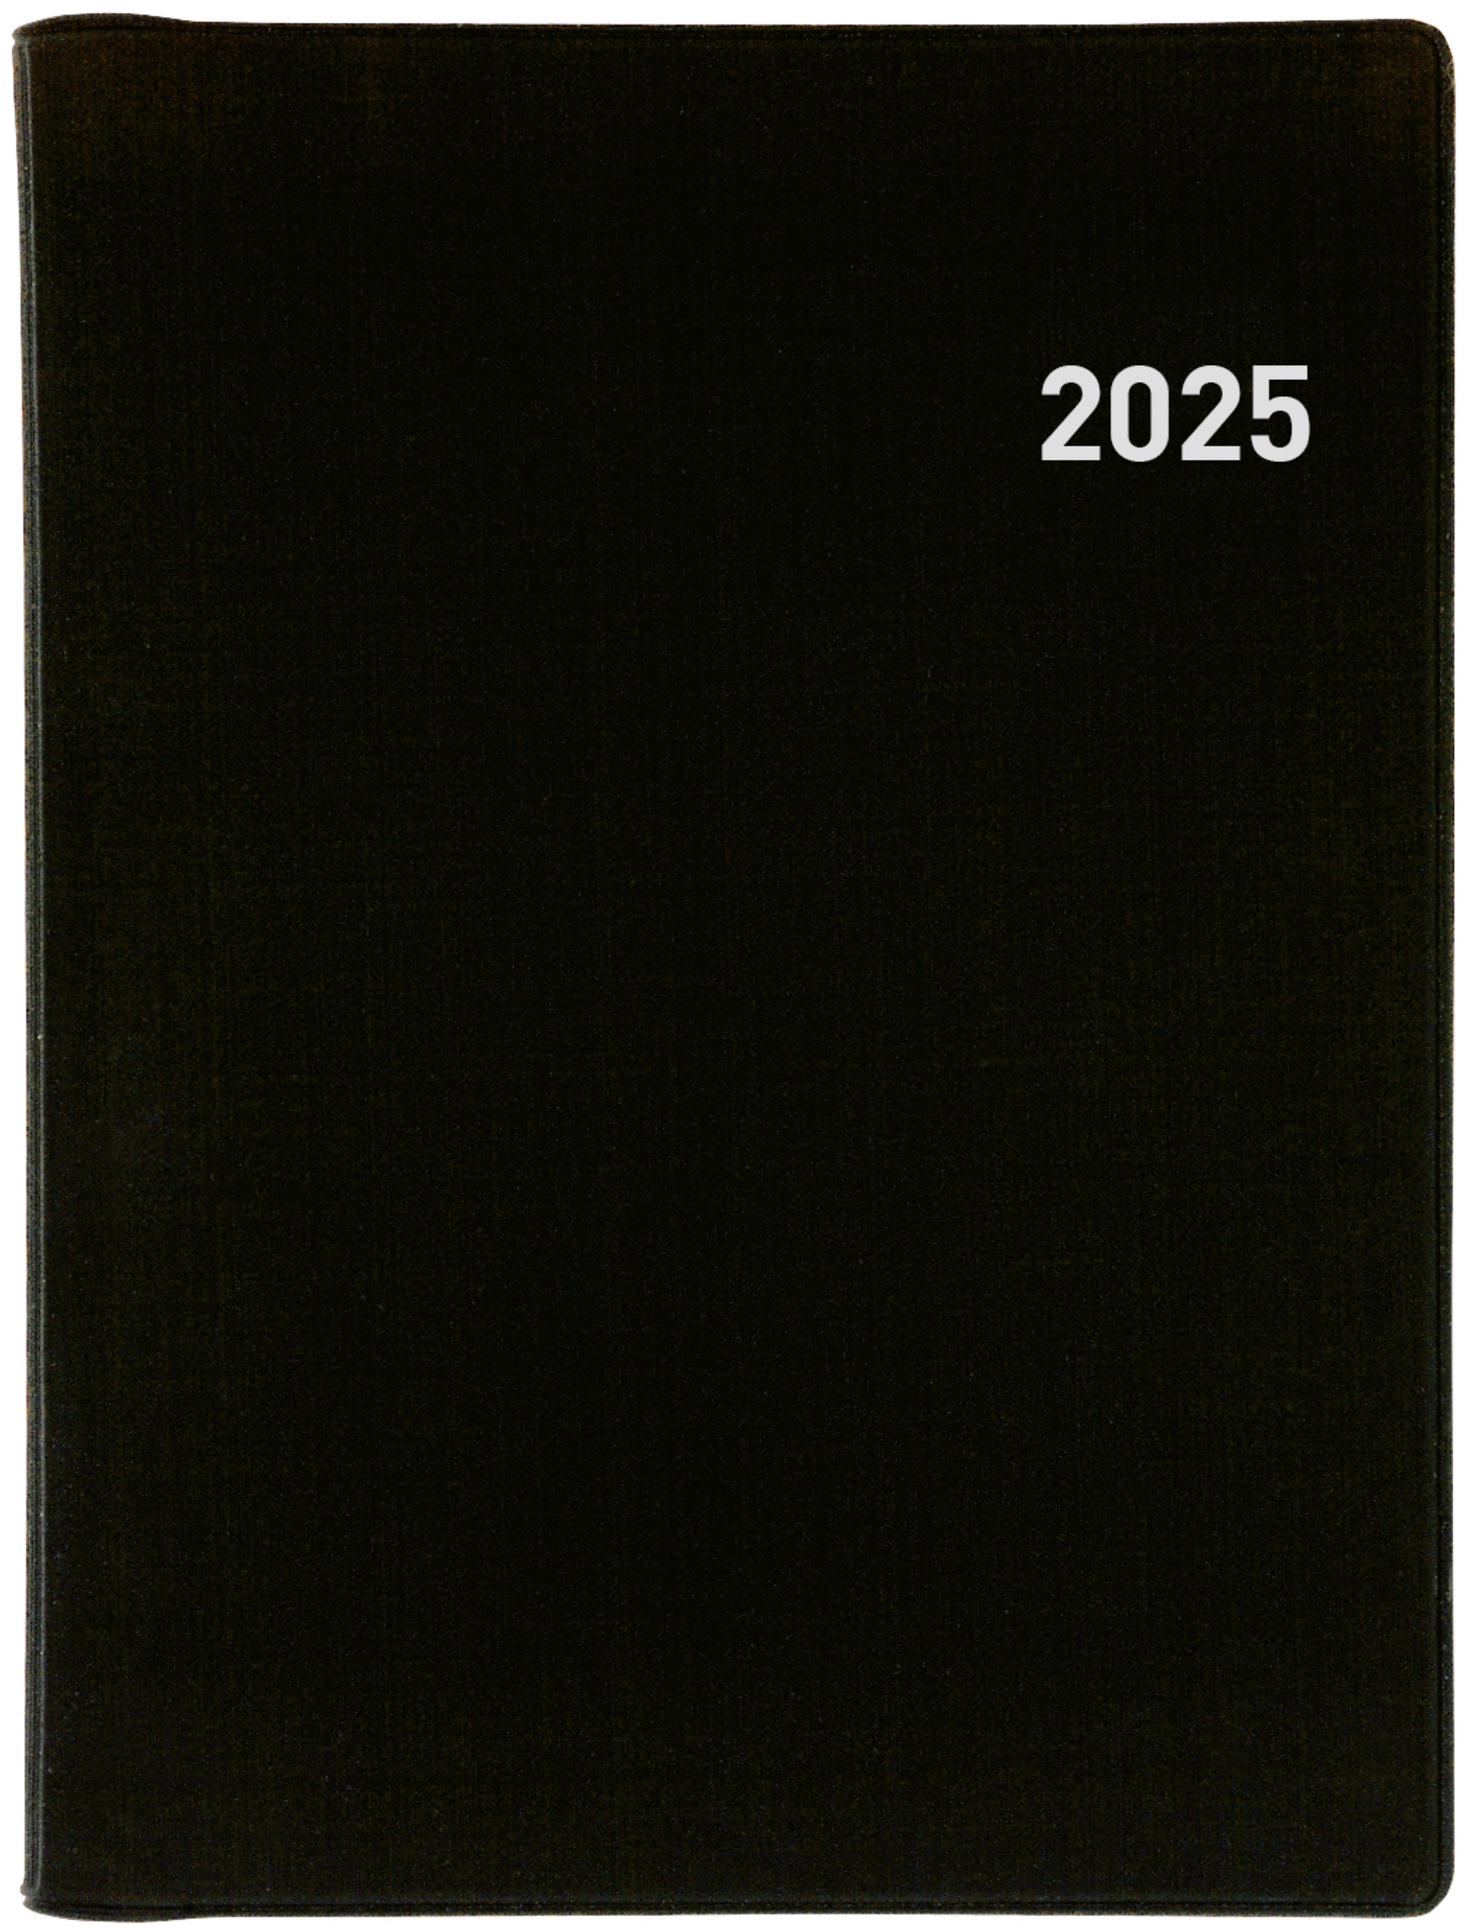 BIELLA Agenda Technikus 4 Wire-O 2025 834141020025 1J/1P noir ML 10.1x14.2cm 1J/1P noir ML 10.1x14.2